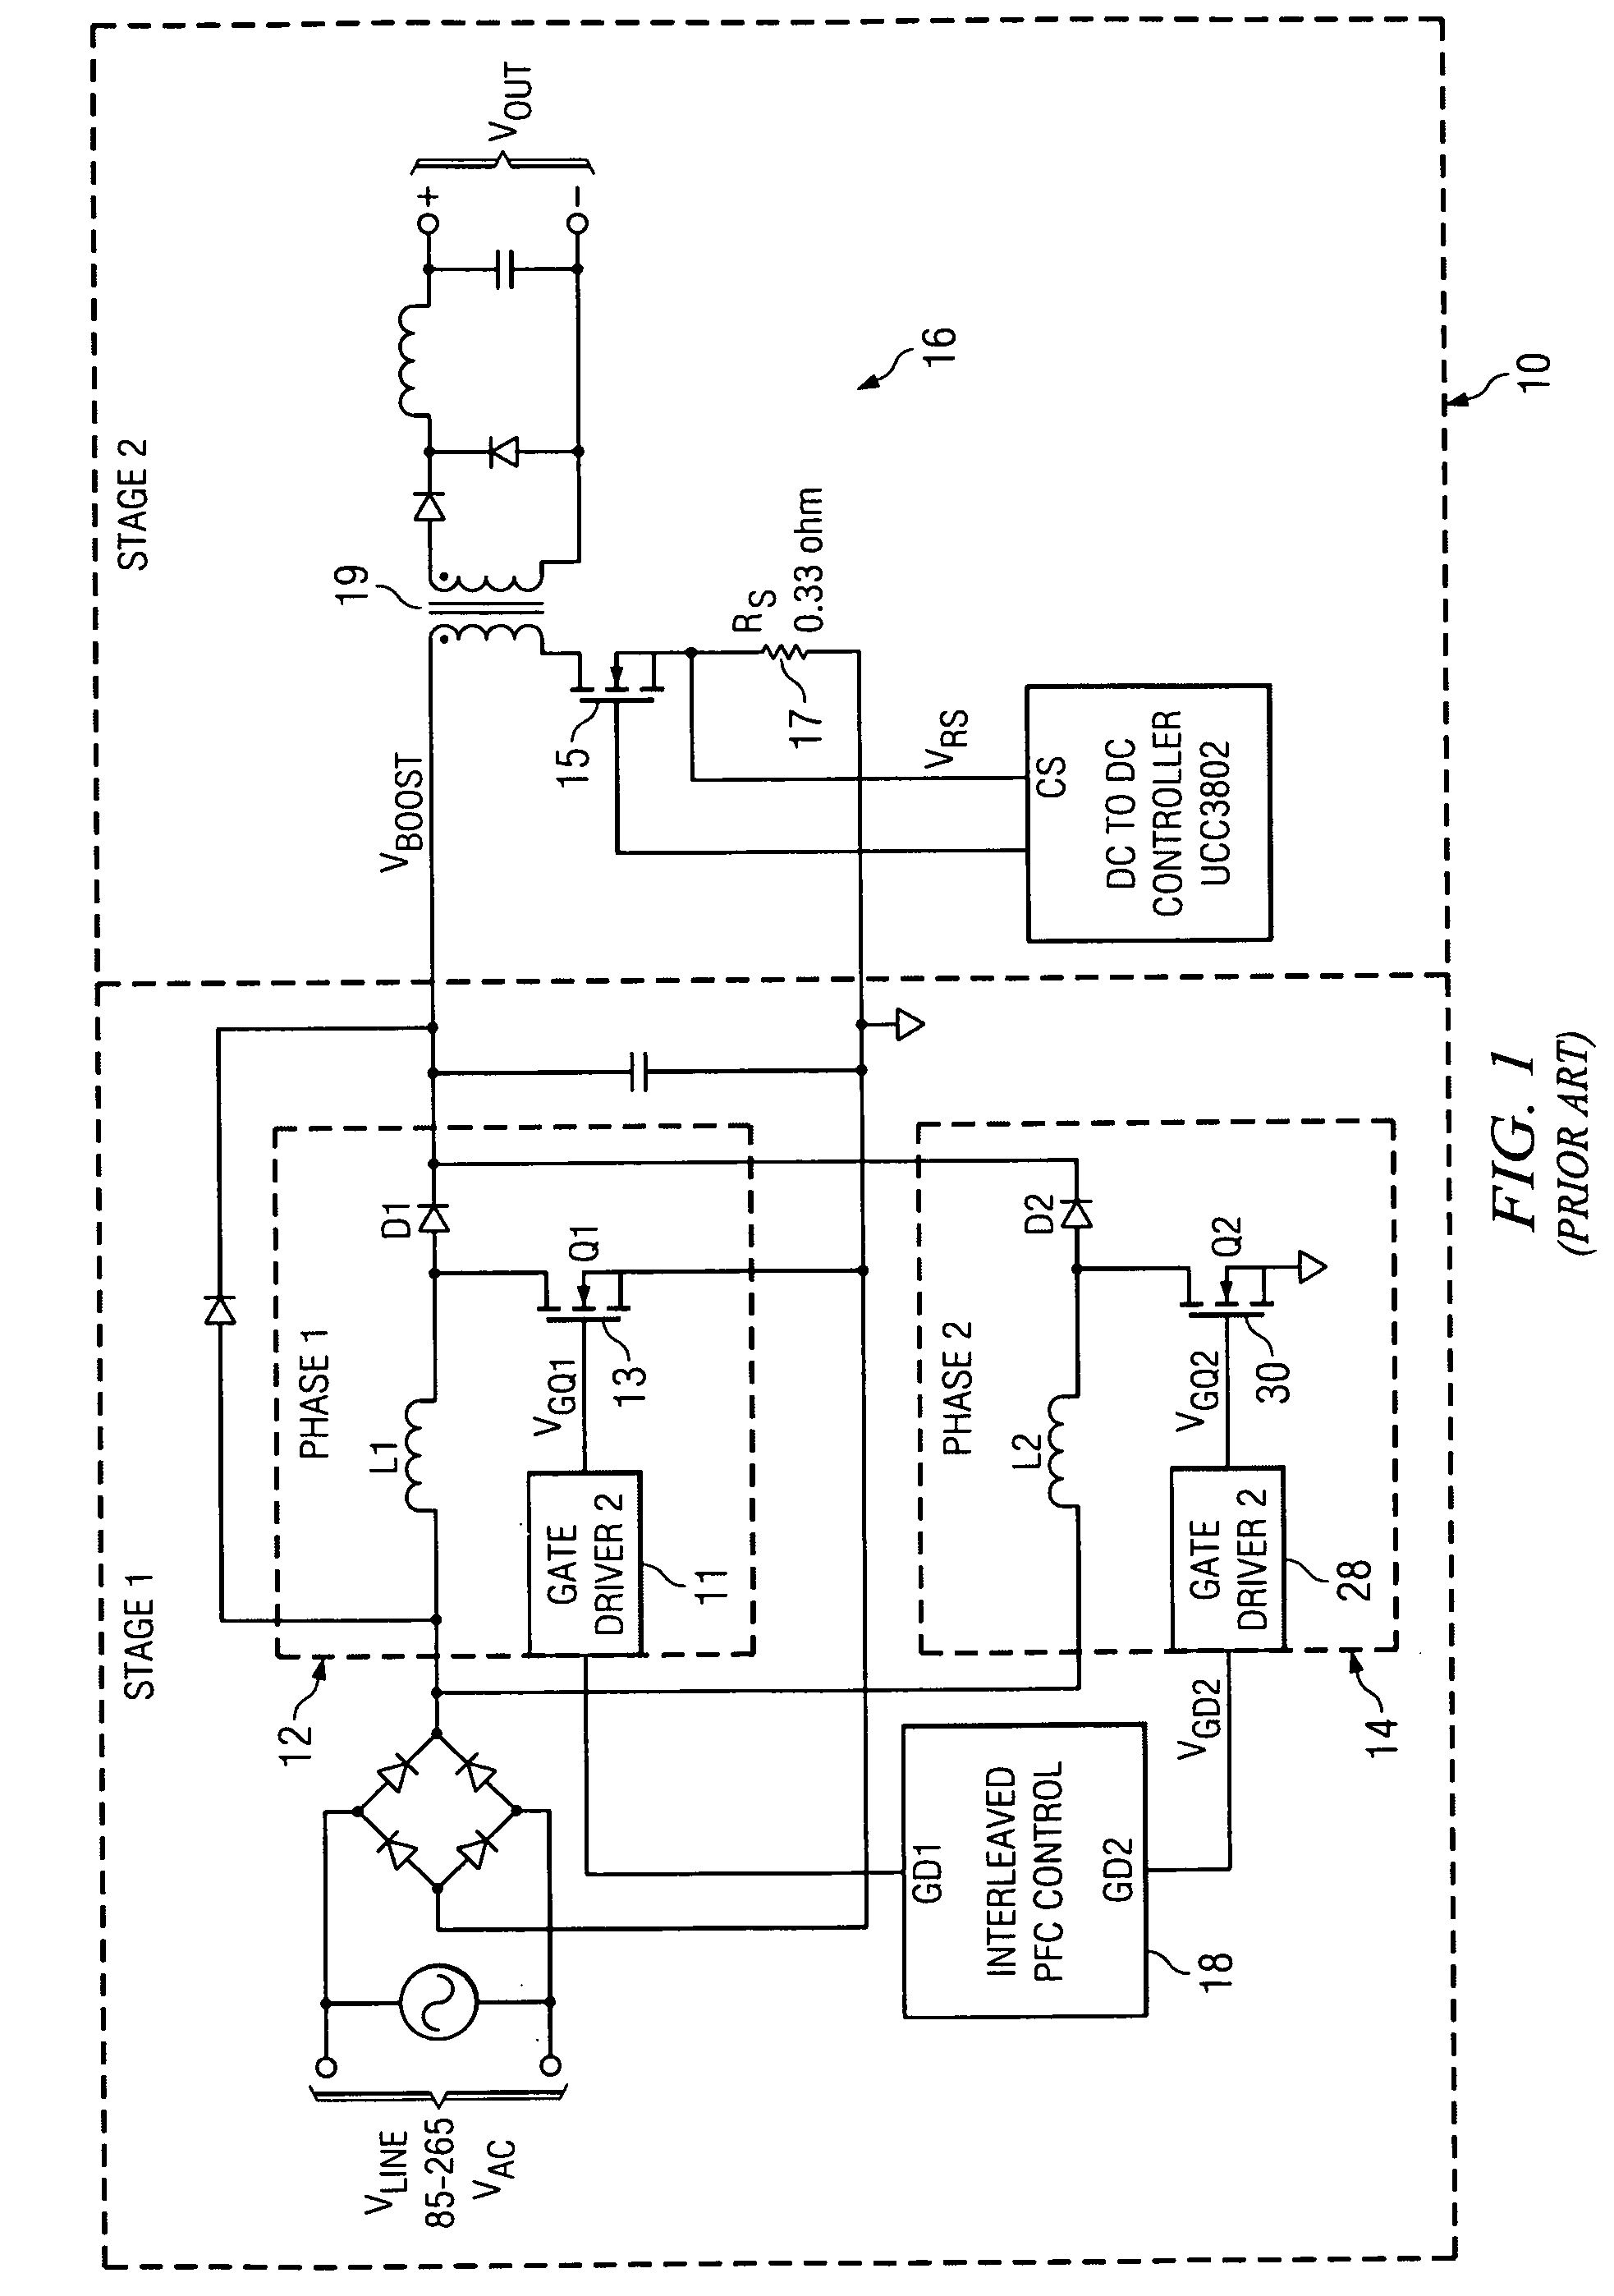 Interleaved power factor correction pre-regulator phase management circuitry